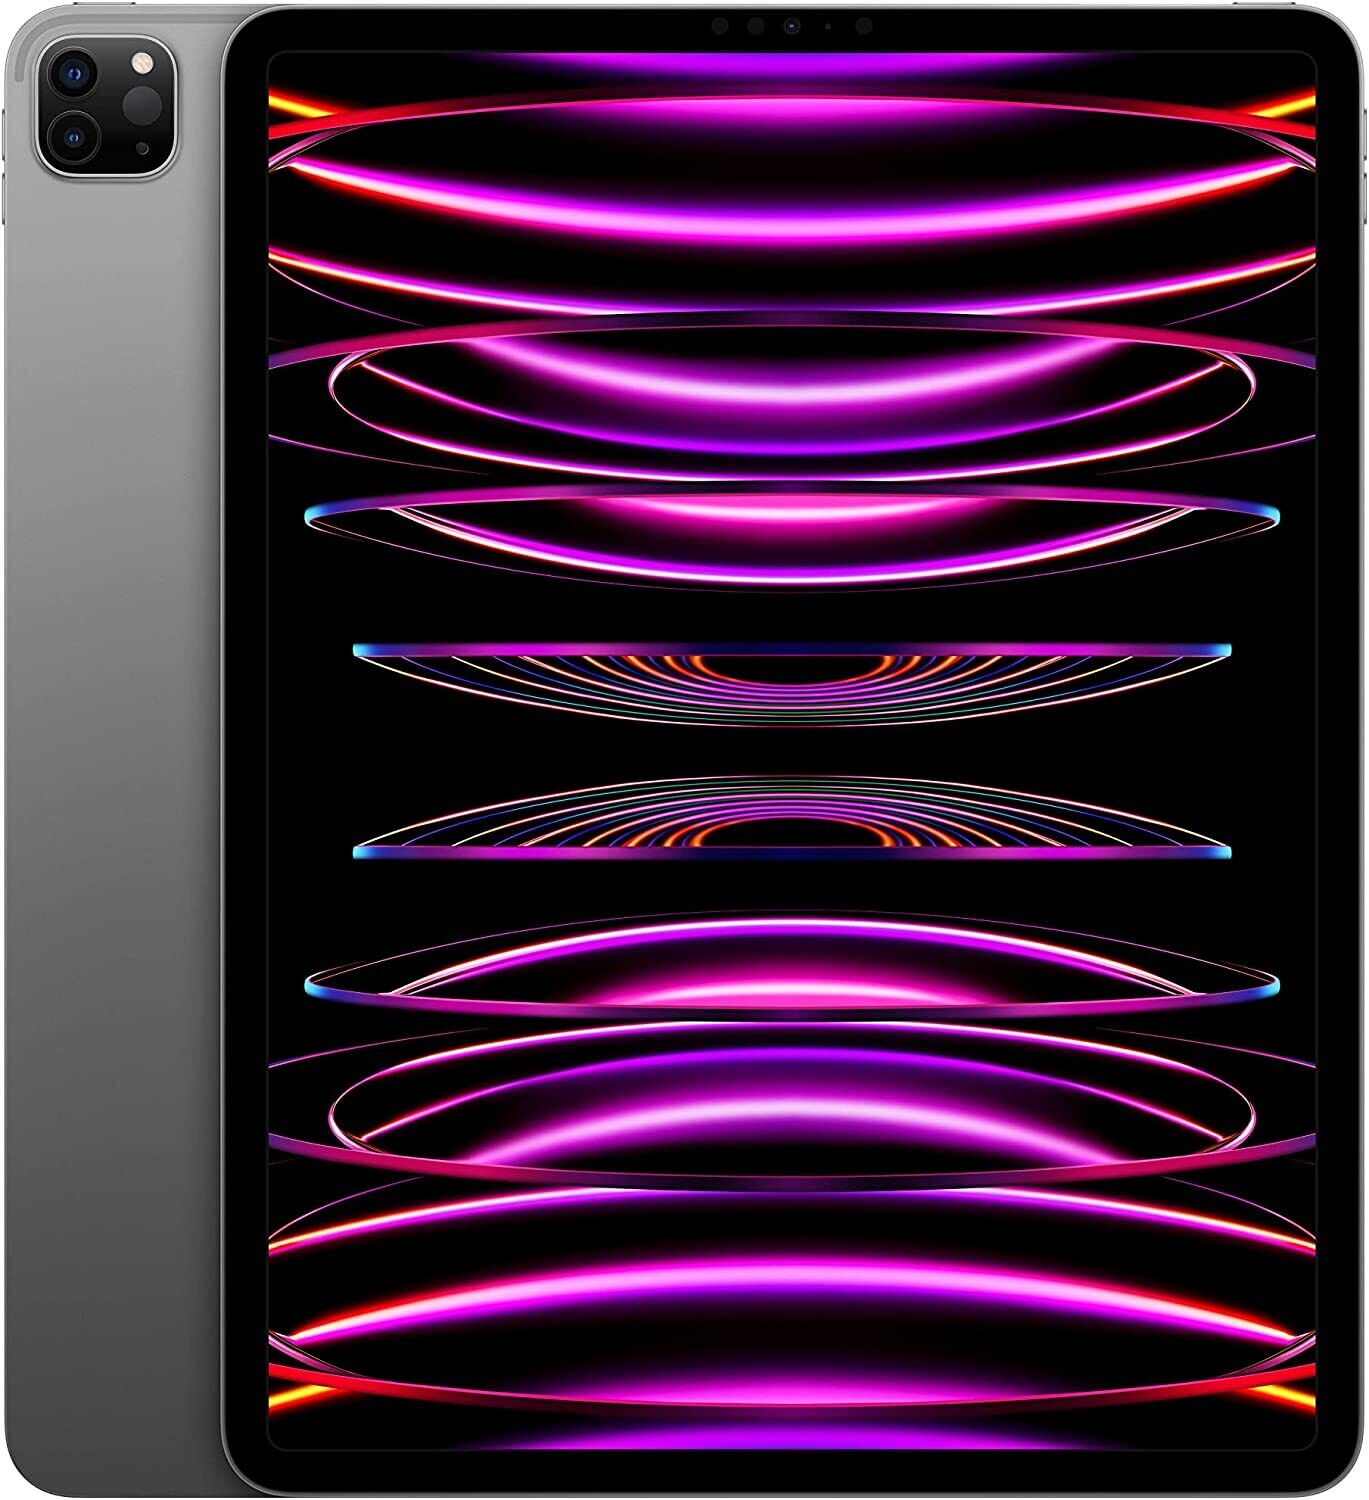 2022 Apple 11-inch iPad Pro (Wi-Fi + Cellular, 128GB) - Space Gray (4th Generation)